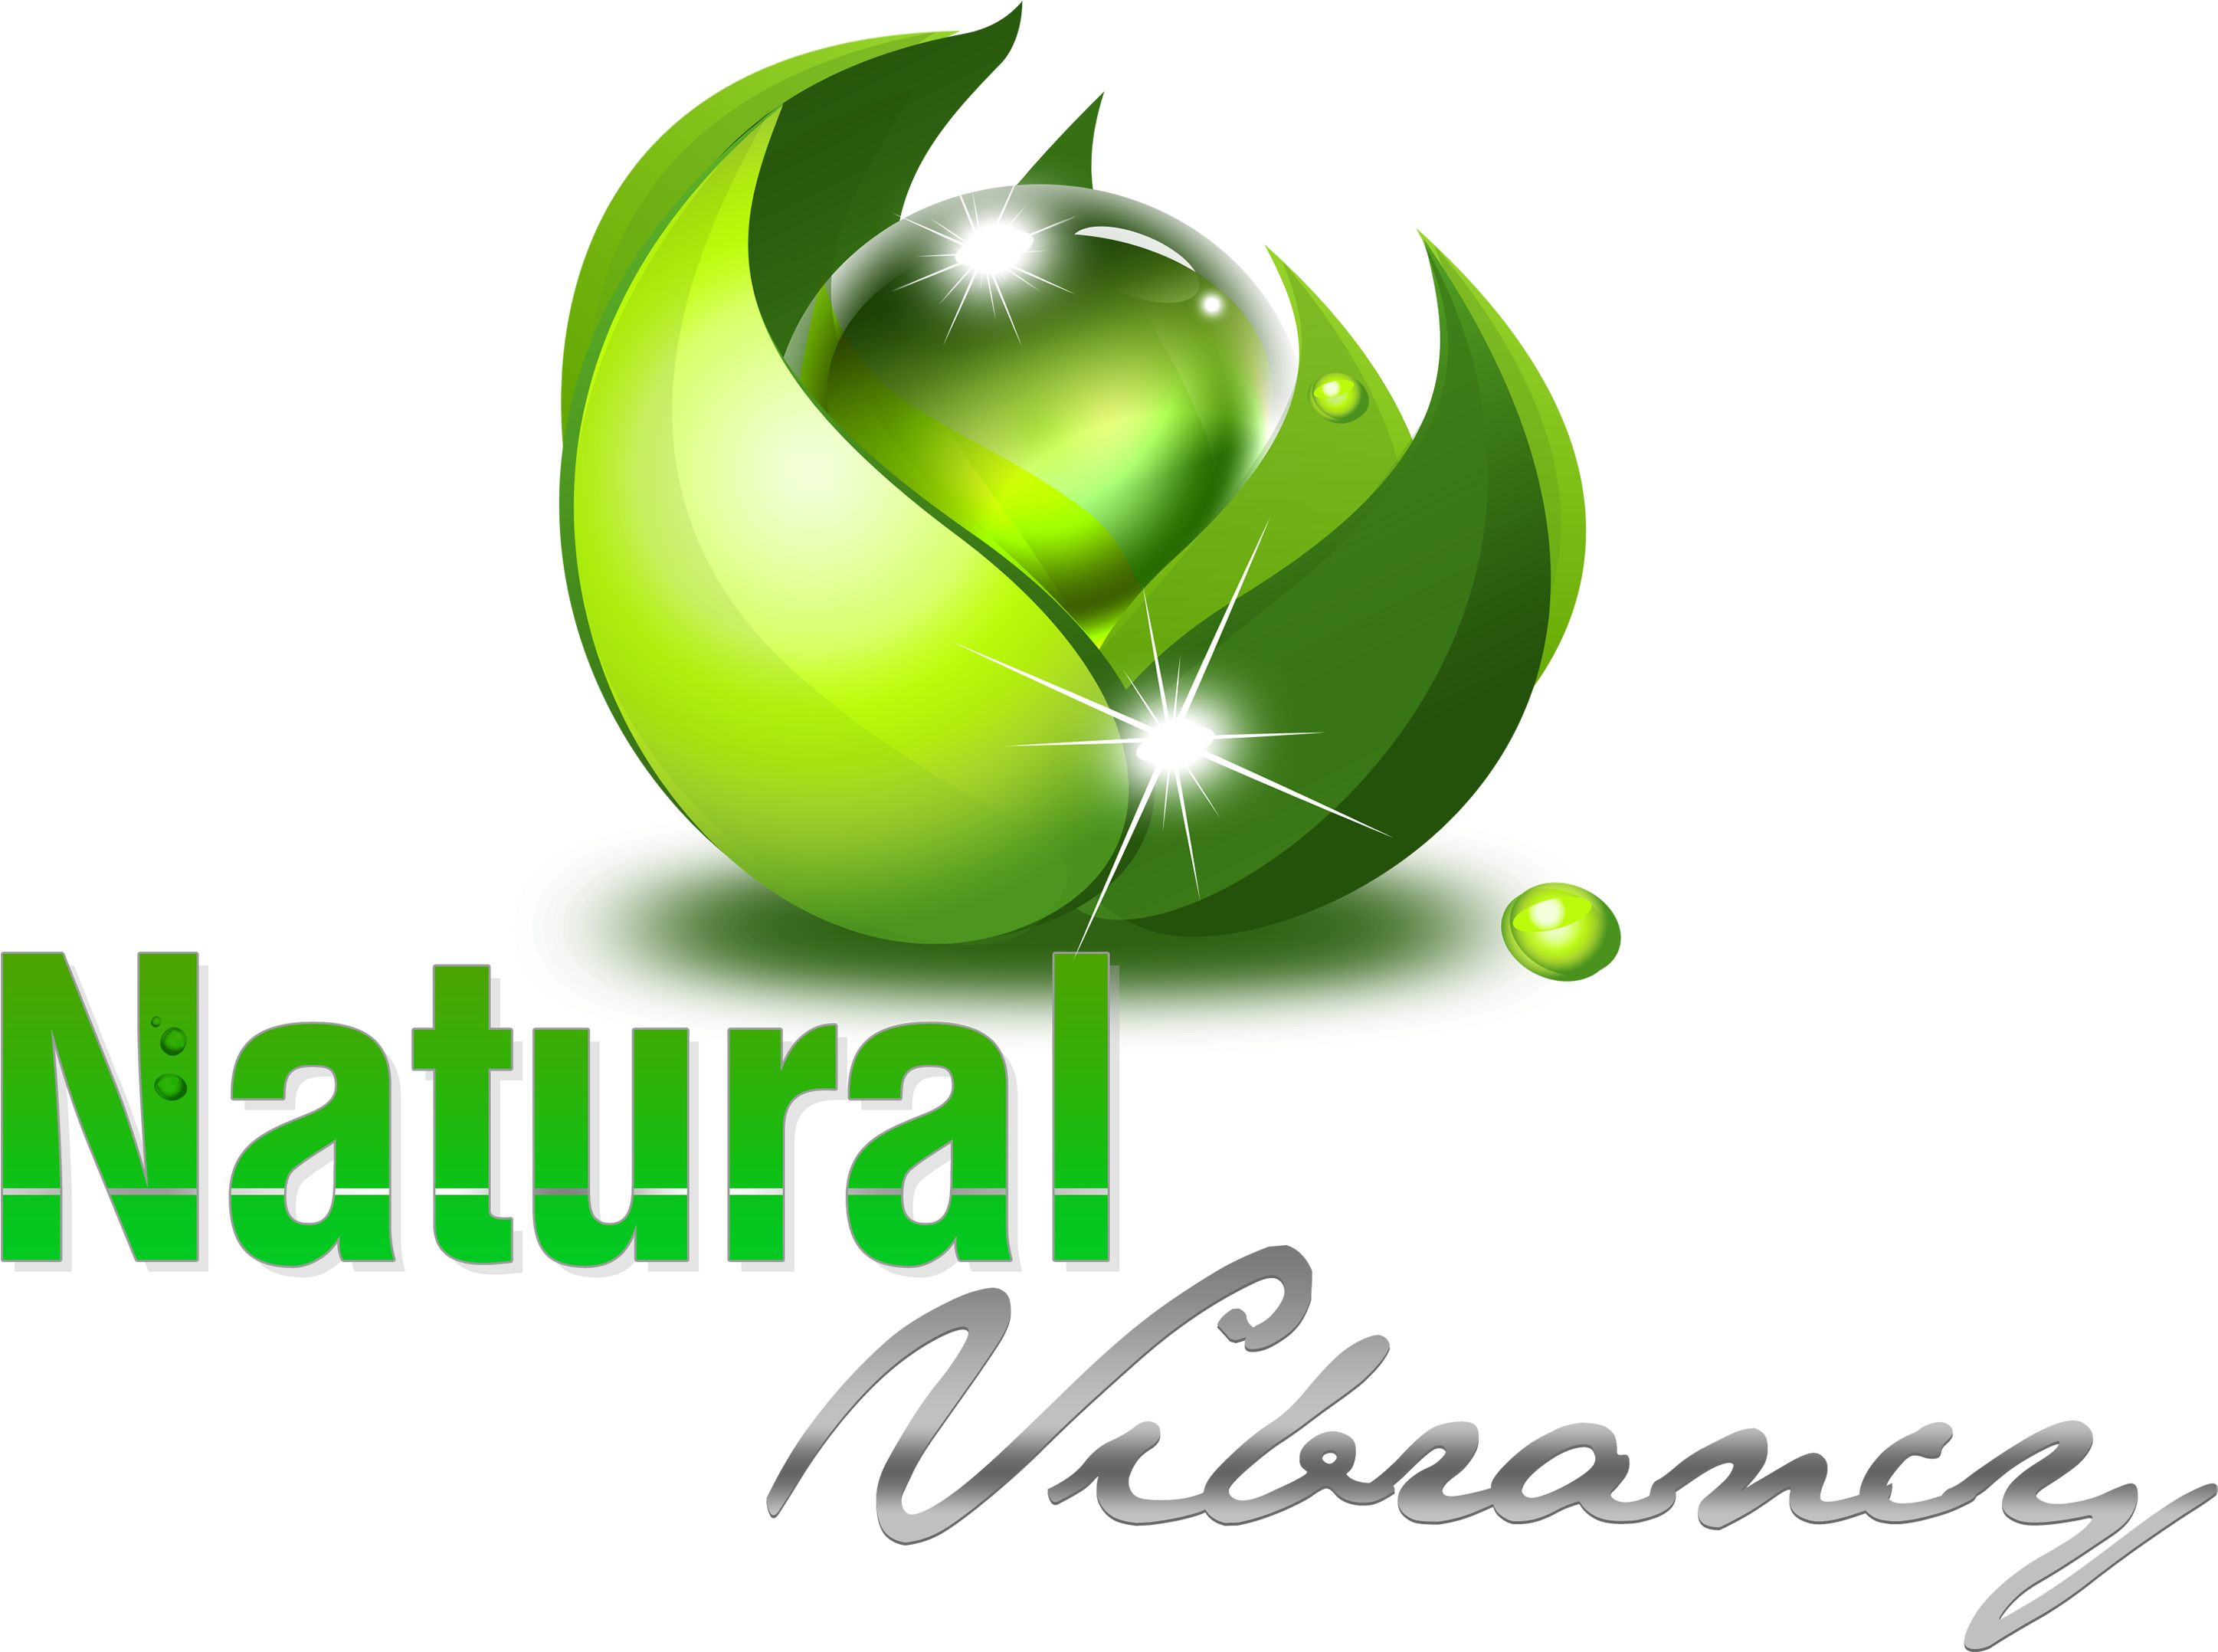 Natural Skin Care - Natural Skin Care (3179x2430)